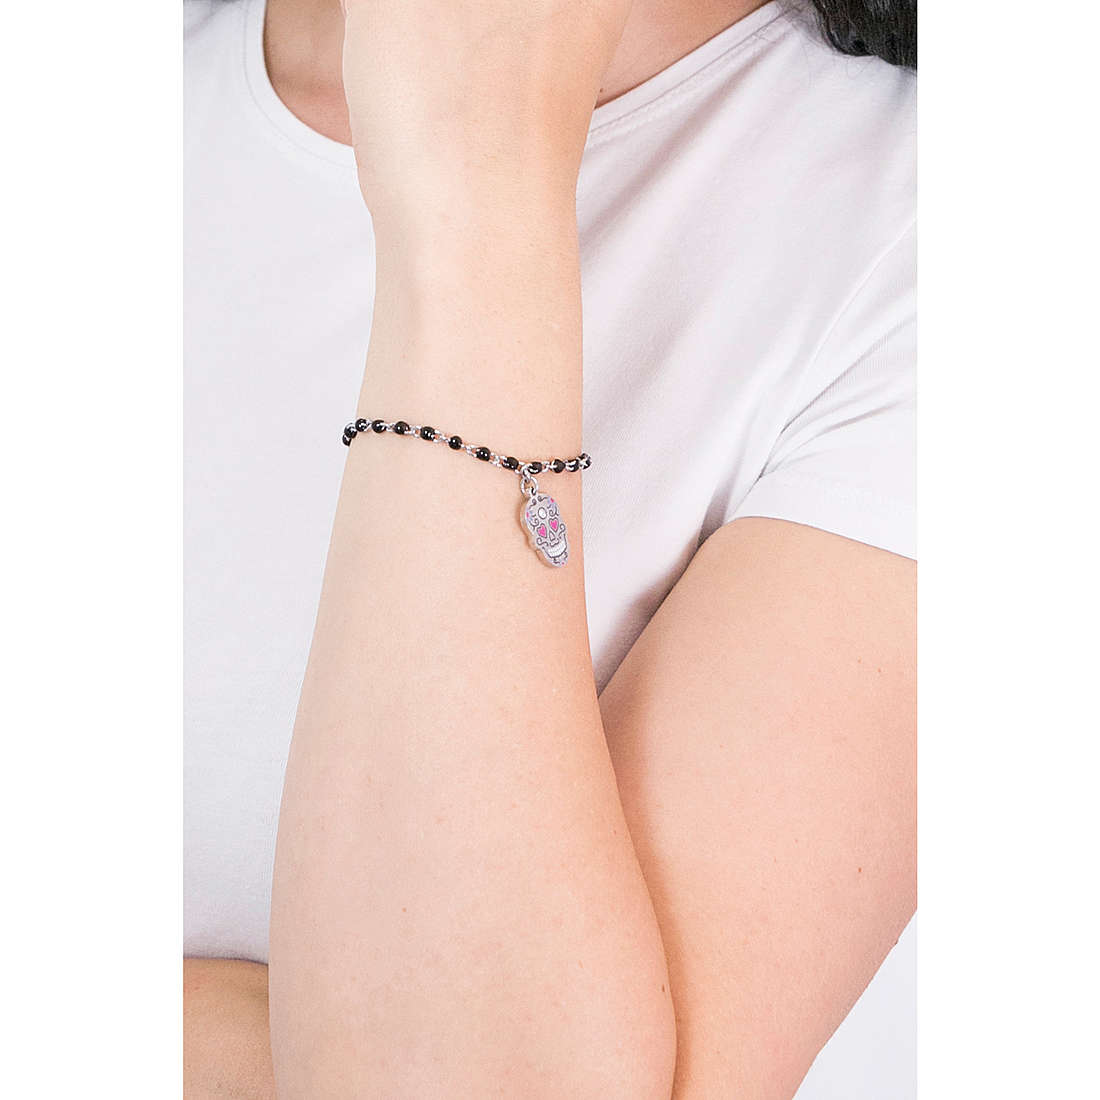 Kidult bracelets Symbols woman 731850 wearing